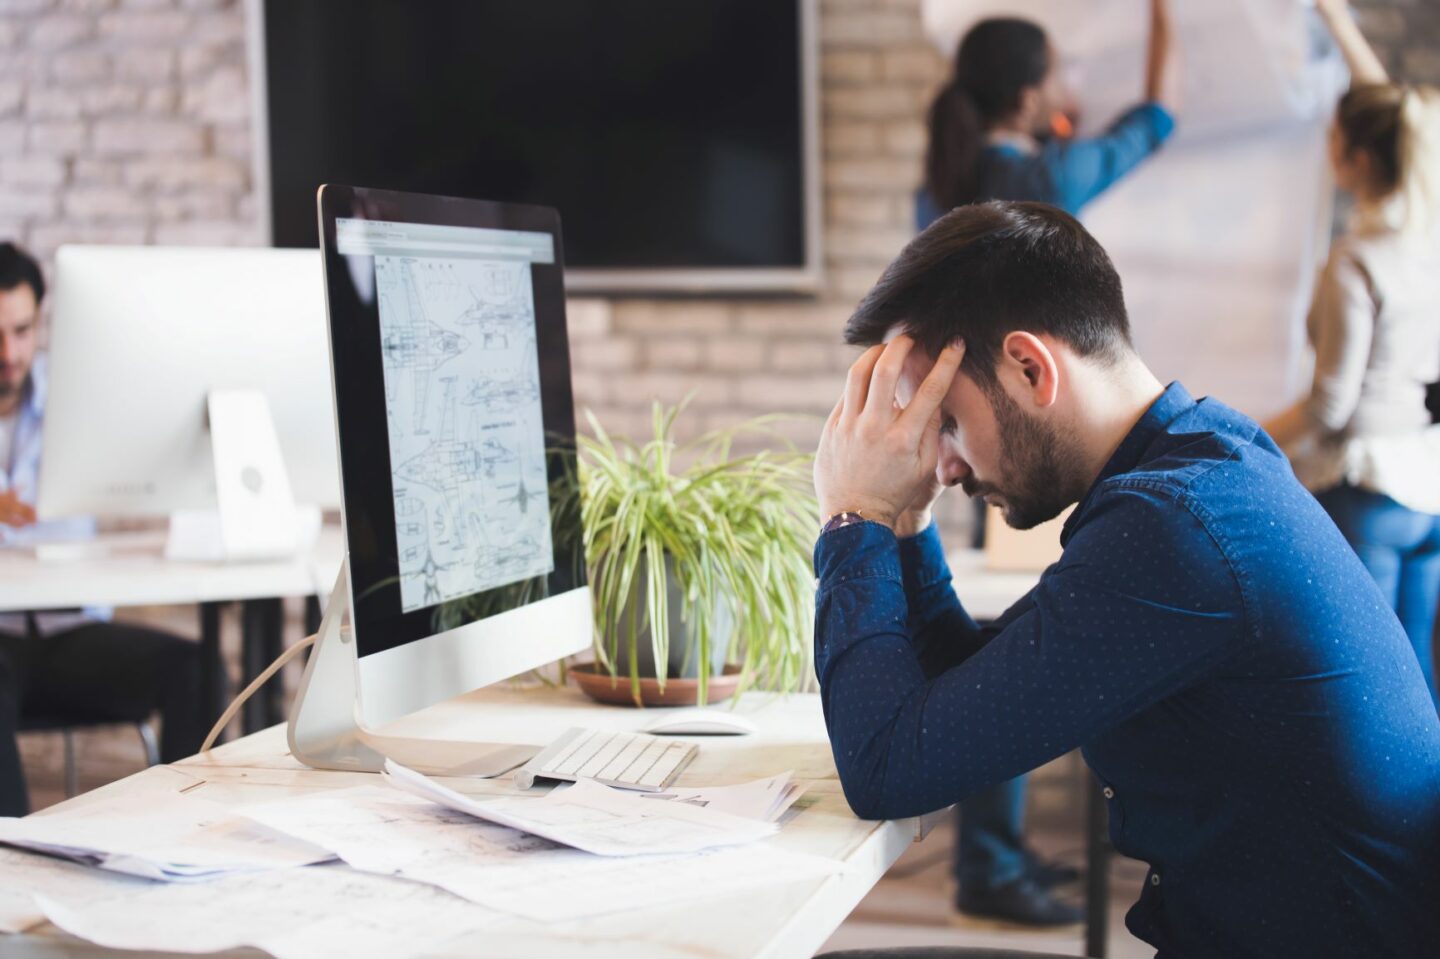 Man siting at work desk struggling to managing stress